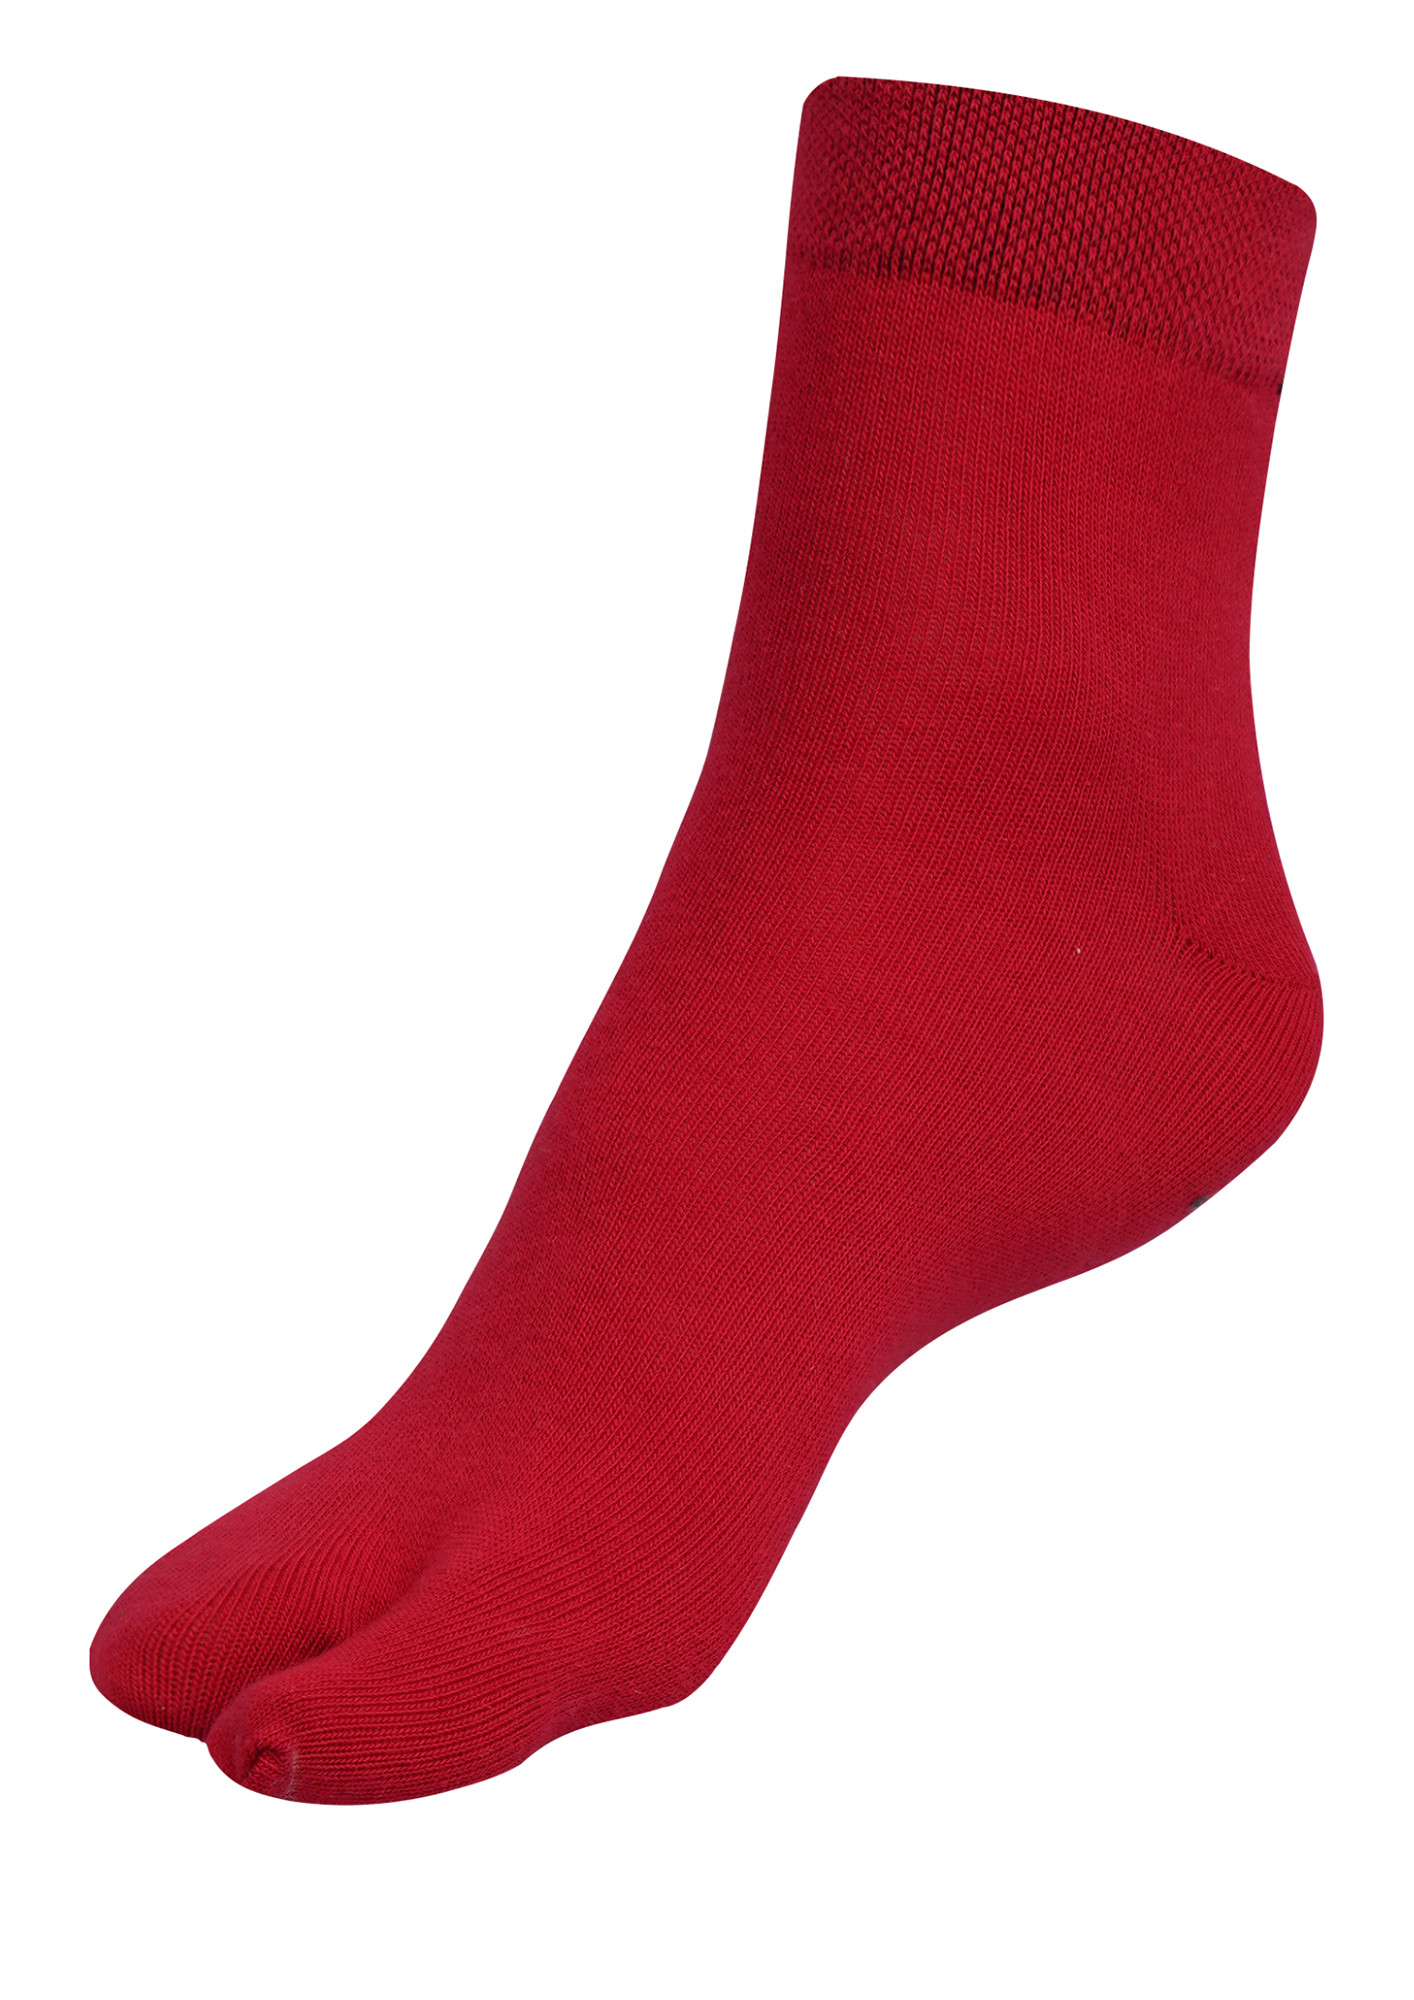 N2S NEXT2SKIN Women's Ankle Length Cotton Thumb Socks (Pack of 3)(Red)